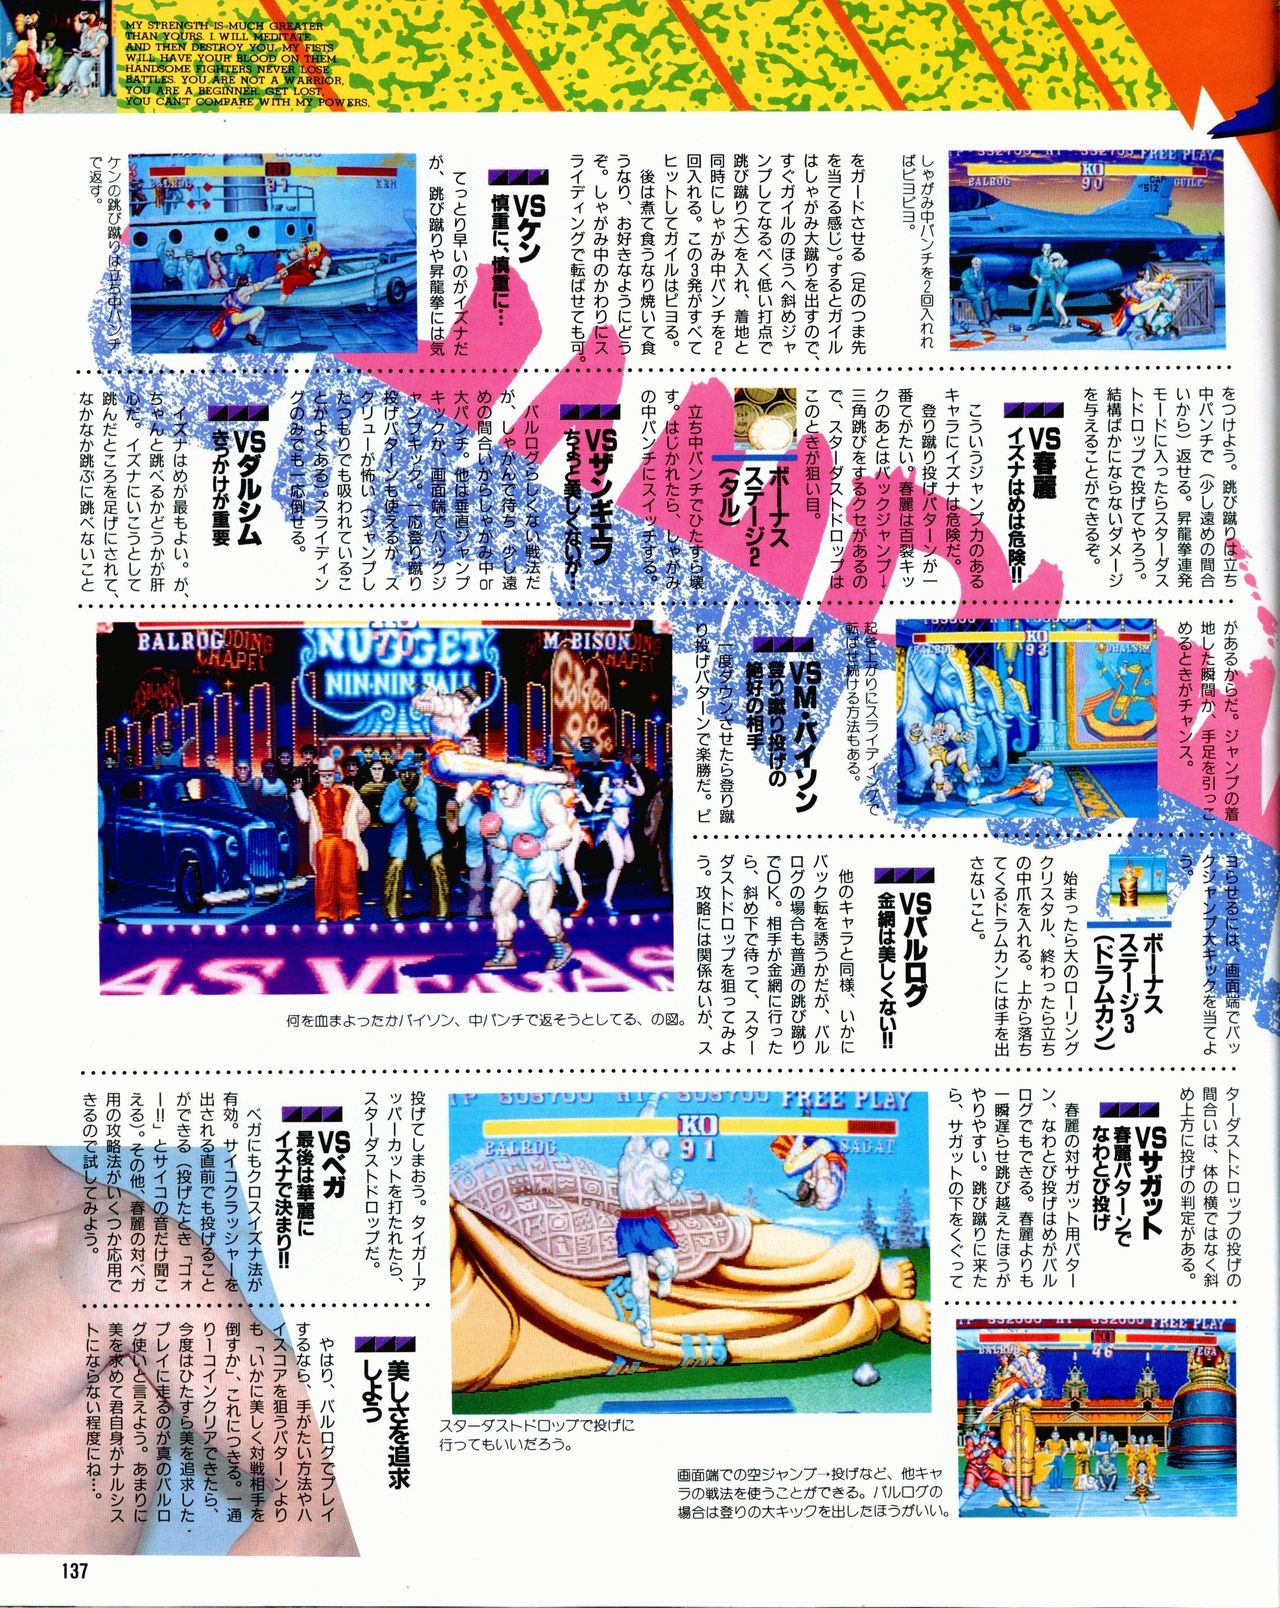 Street Fighter II Dash - Gamest special issue 77 138